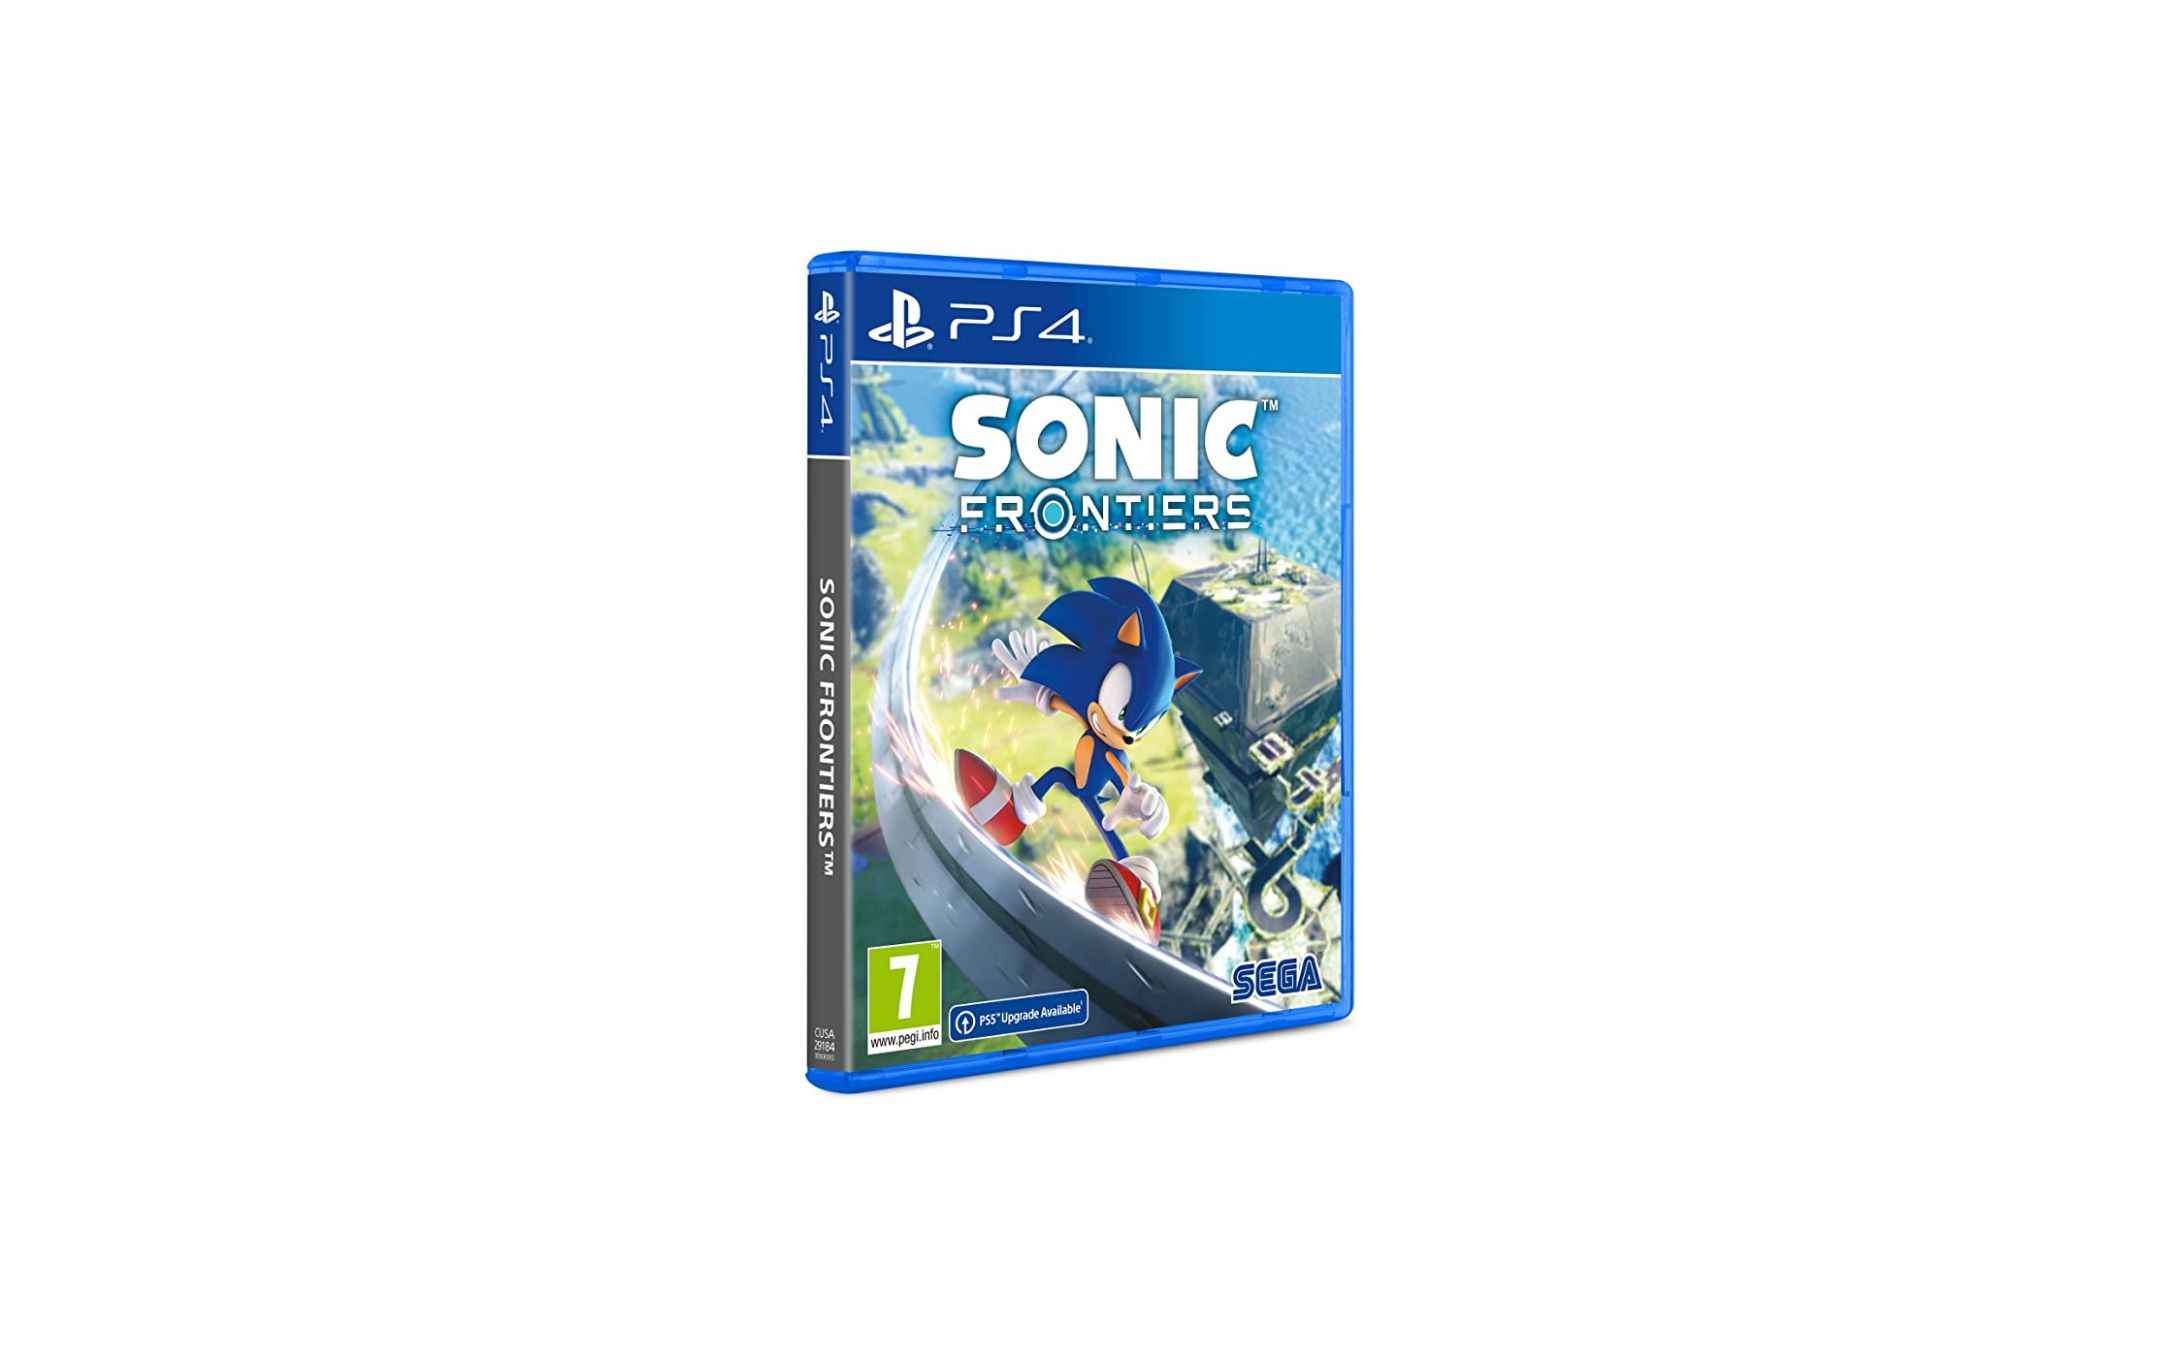 Sonic Frontiers PS4: in SUPER sconto del 47%